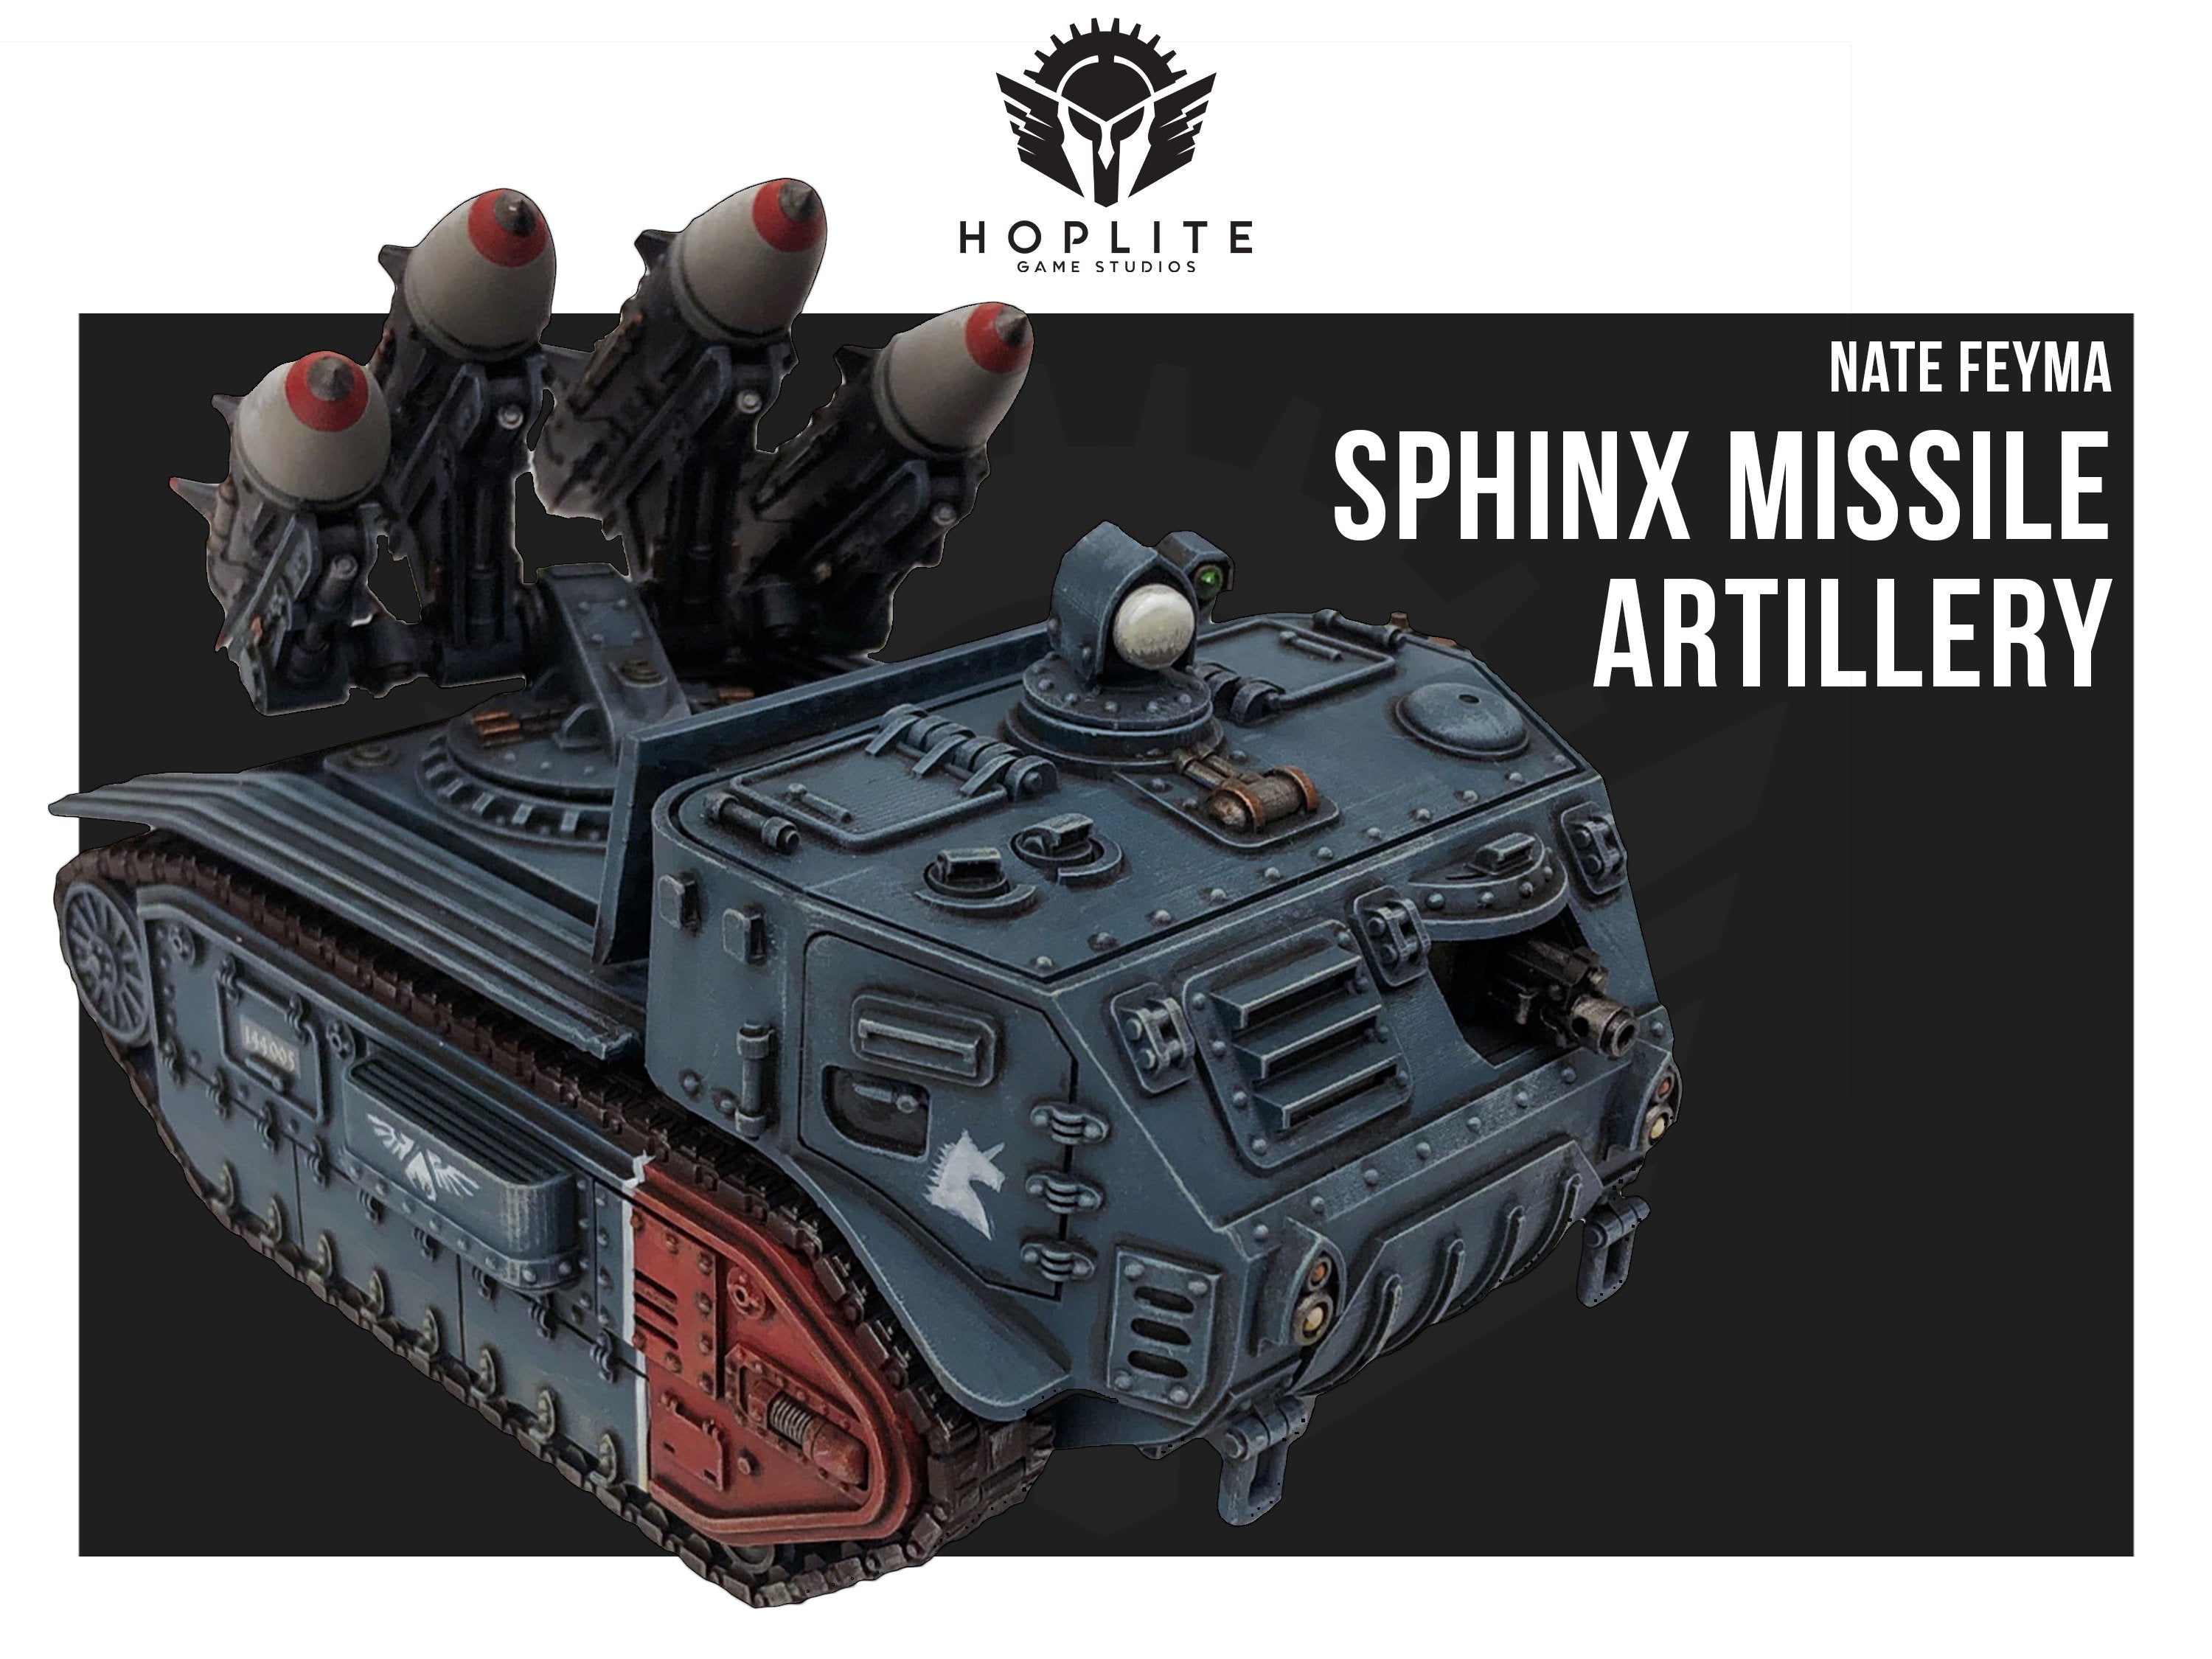 Sphinx Missile Artilley